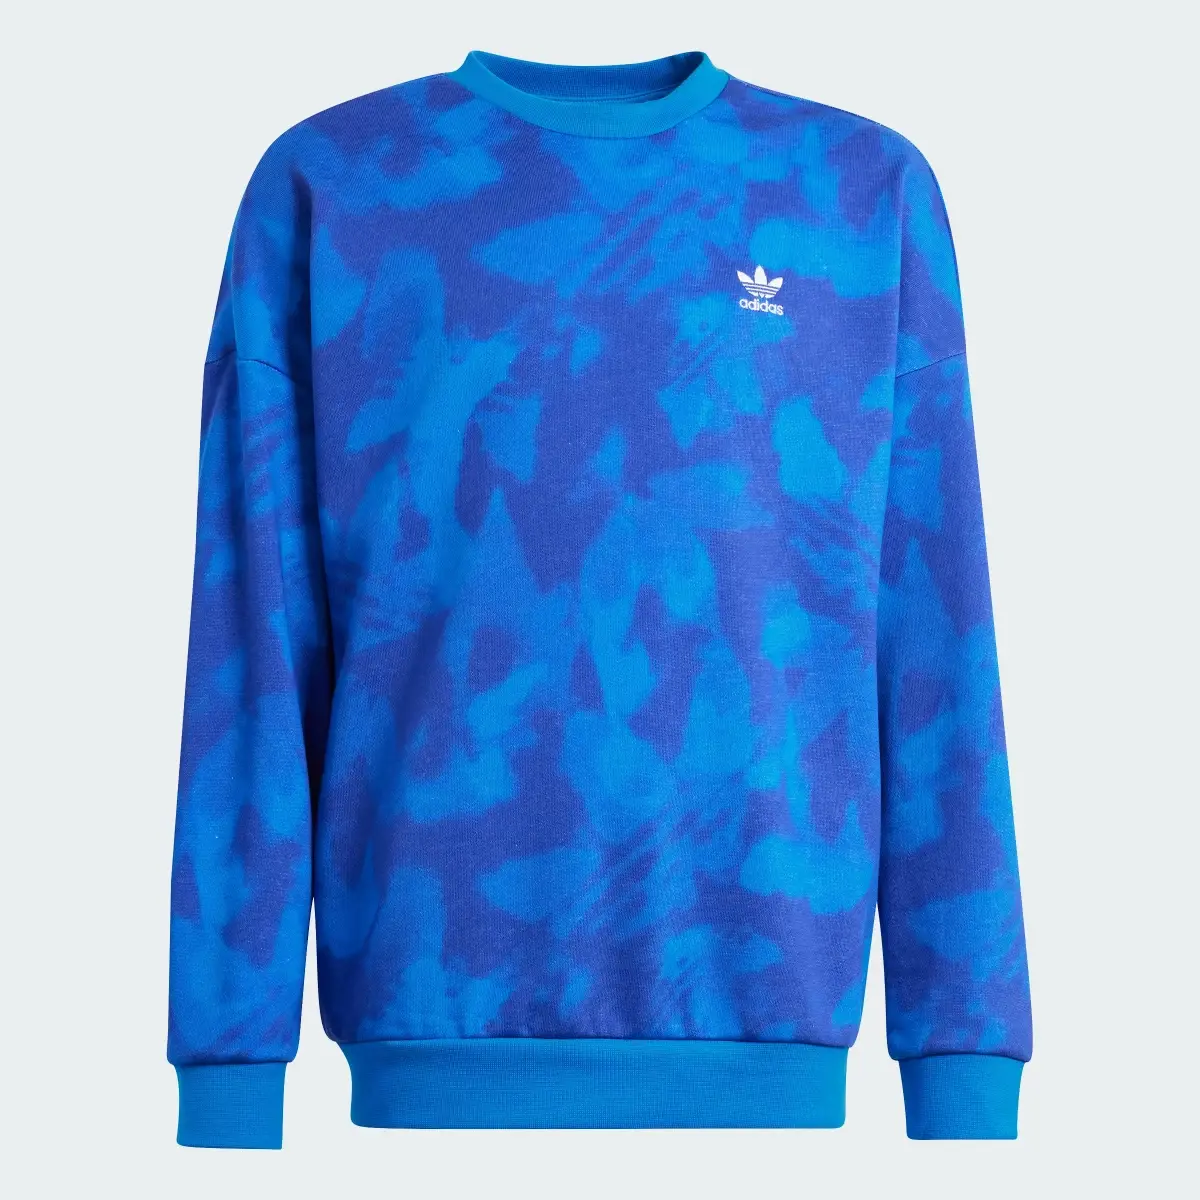 Adidas Summer Allover Print Sweatshirt. 1